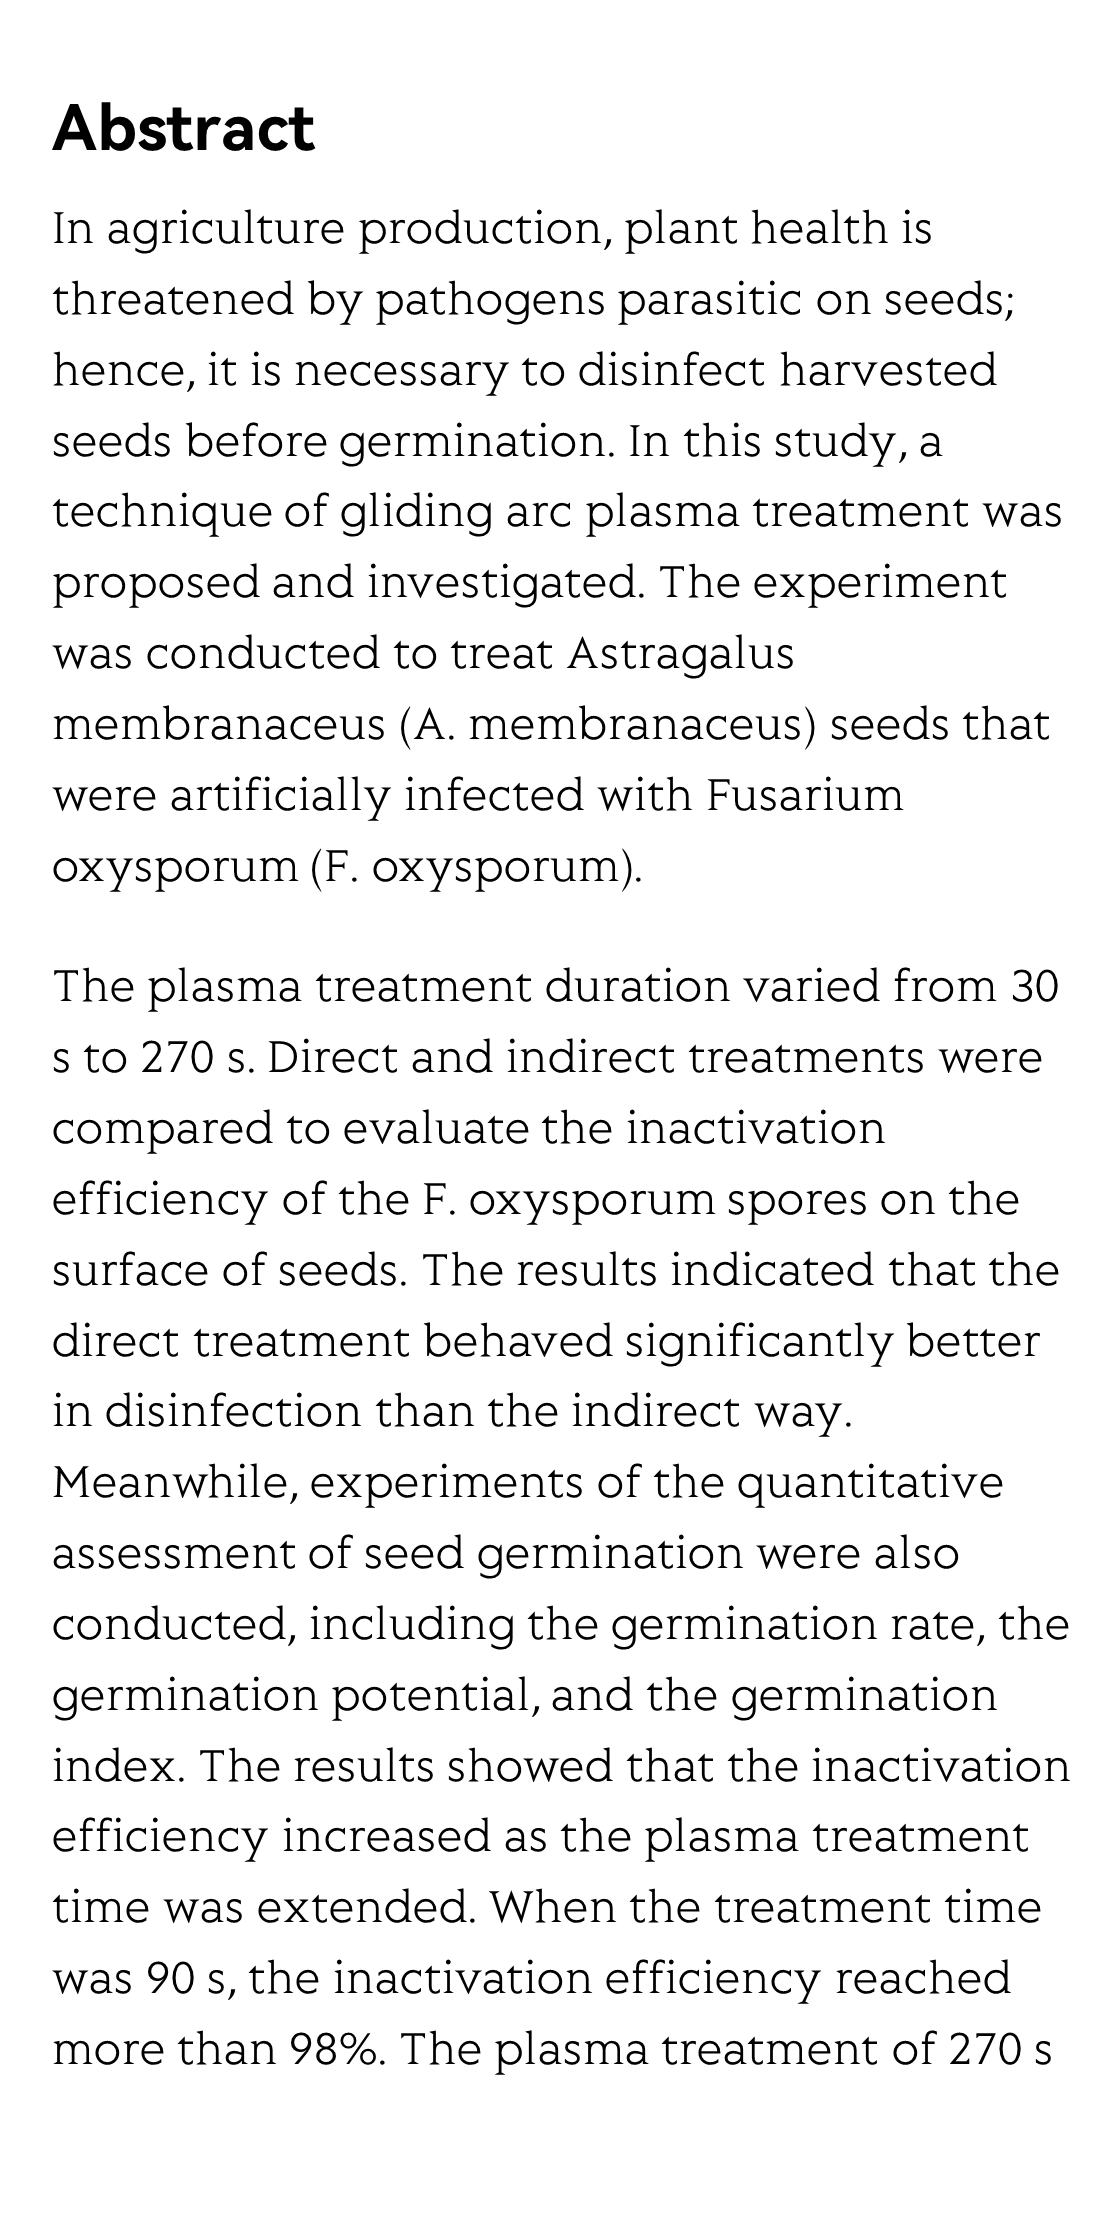 Decontamination of infected plant seeds utilizing atmospheric gliding arc discharge plasma treatment_2